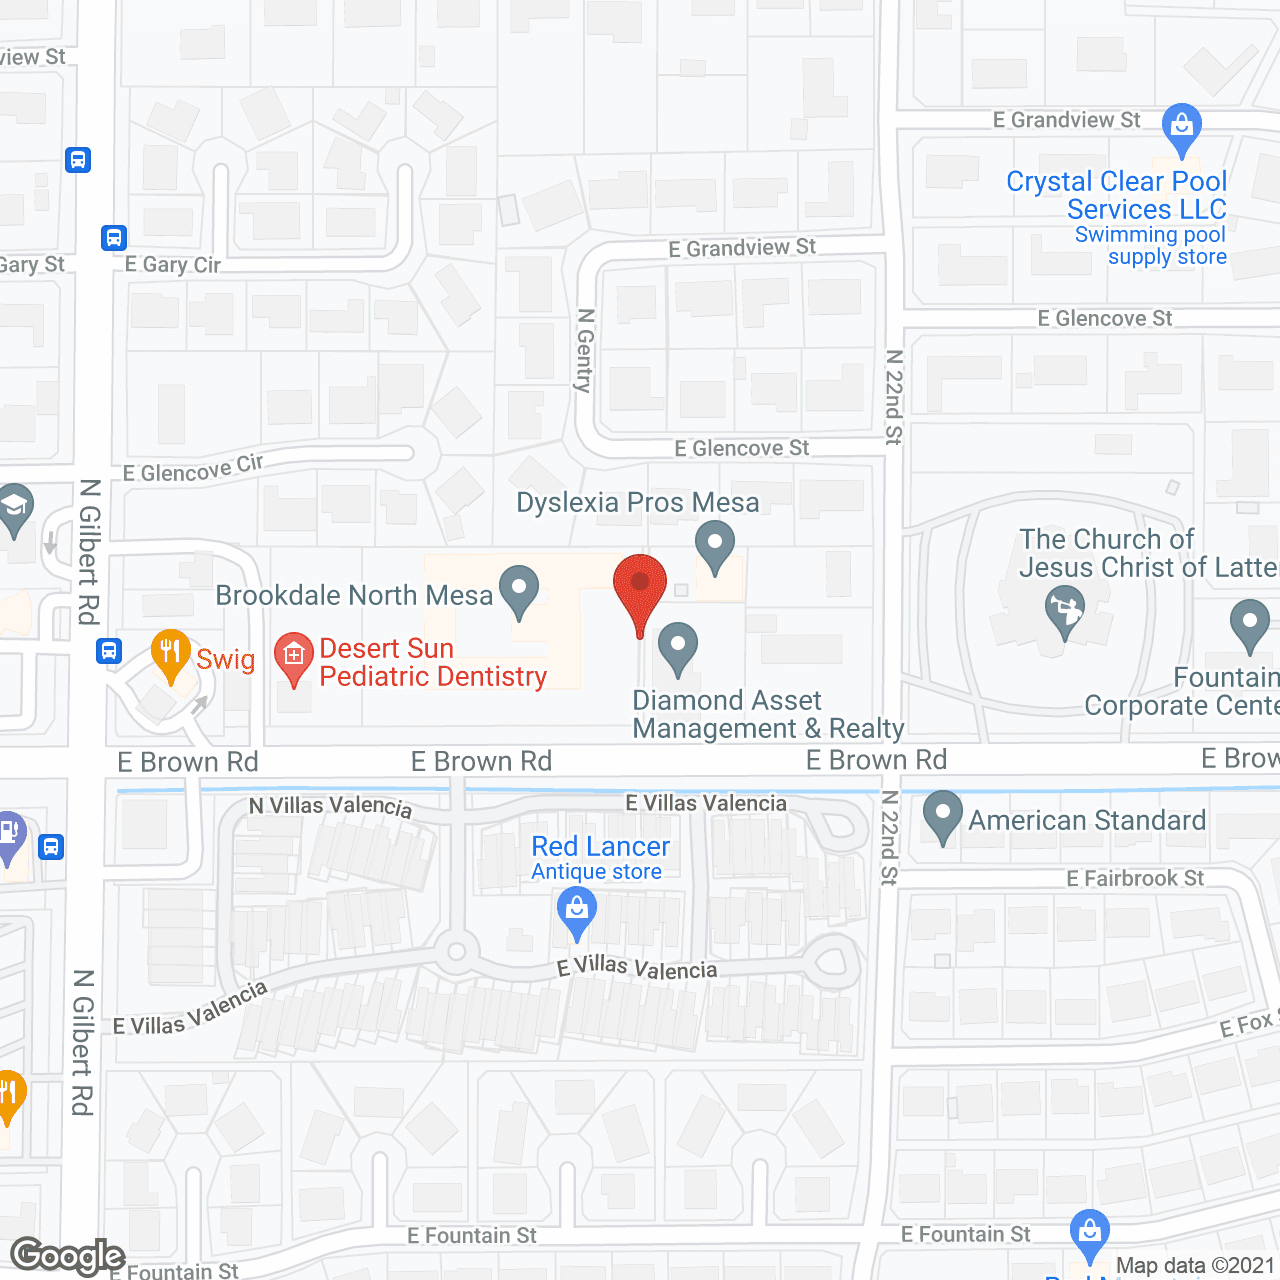 Brookdale North Mesa in google map